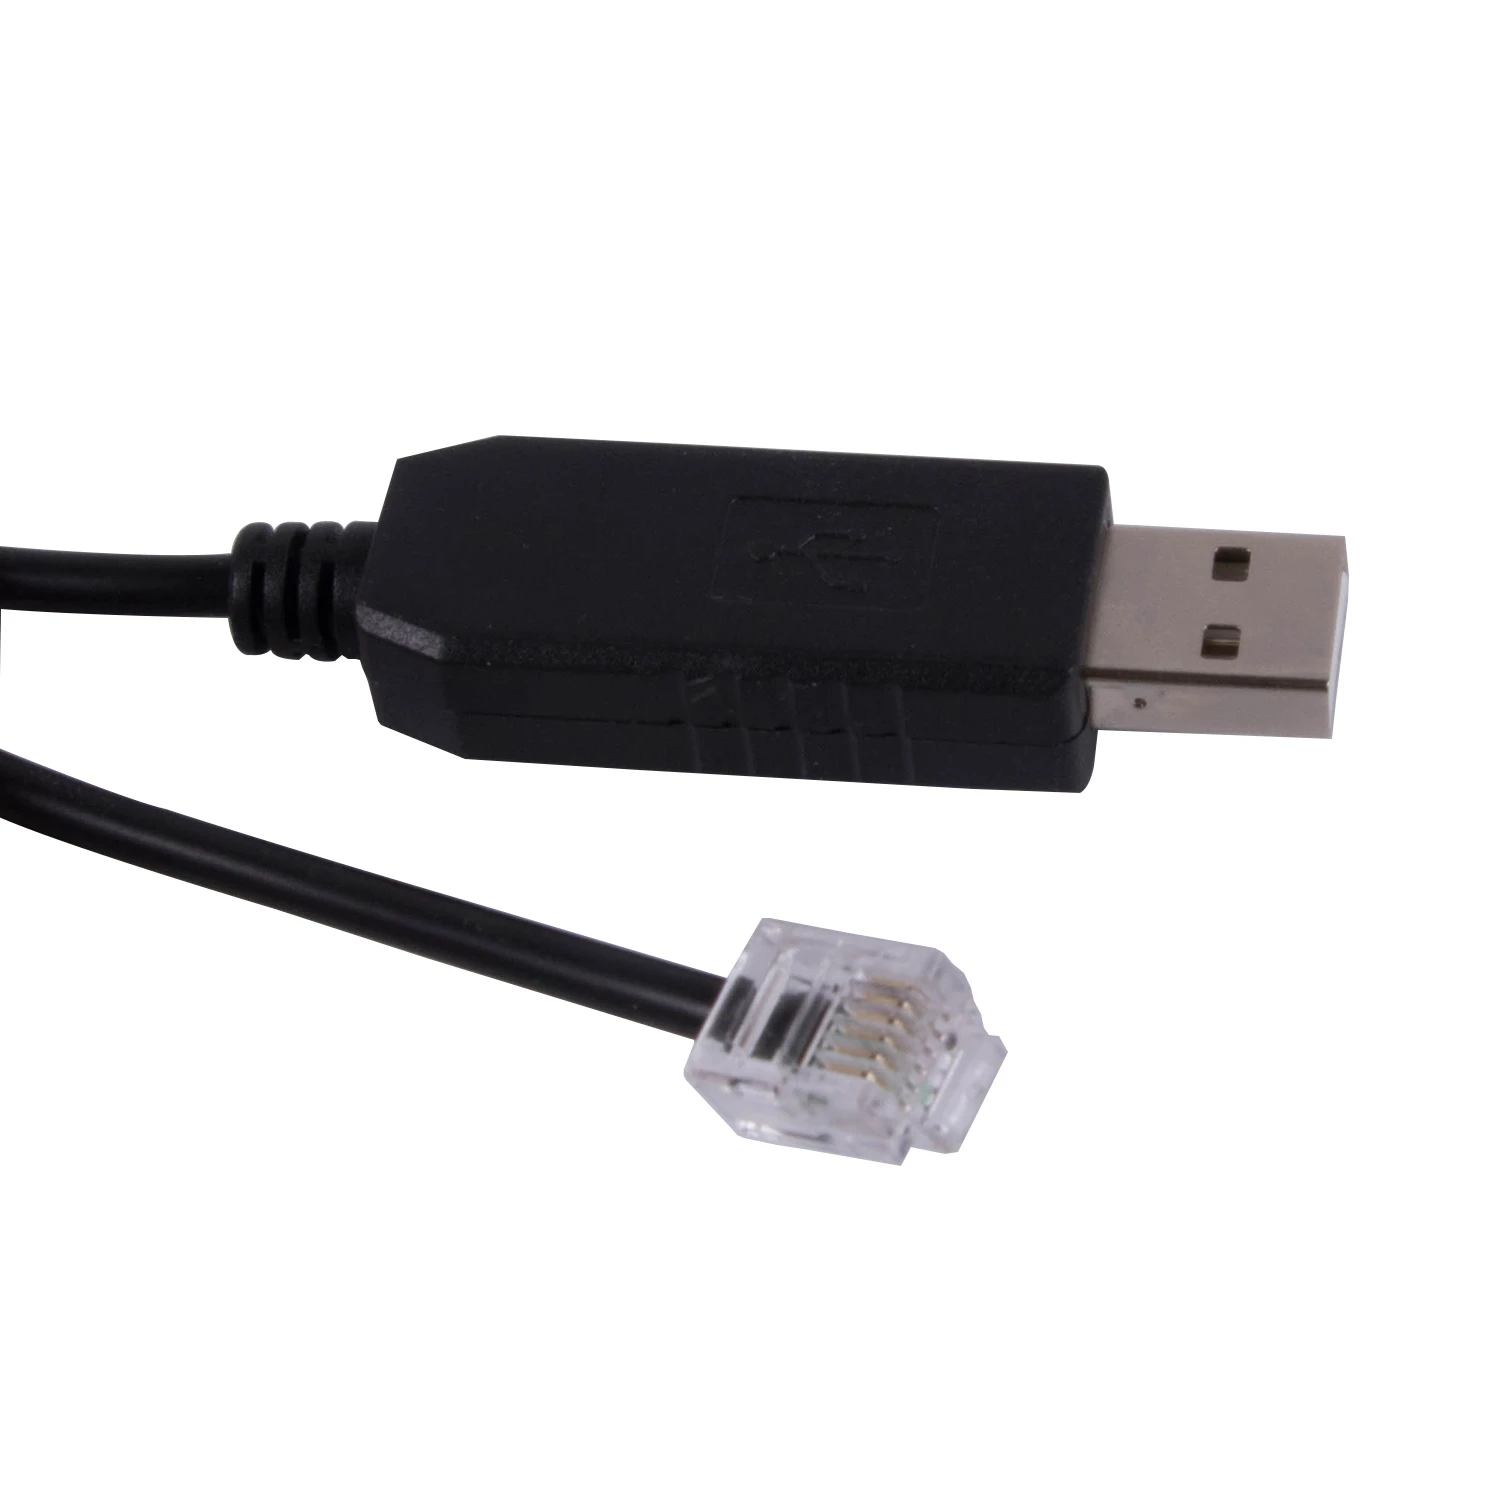 USB Programming Cord Cable Yaesu Vertex Standard RadioFT-1500M FT-1500 